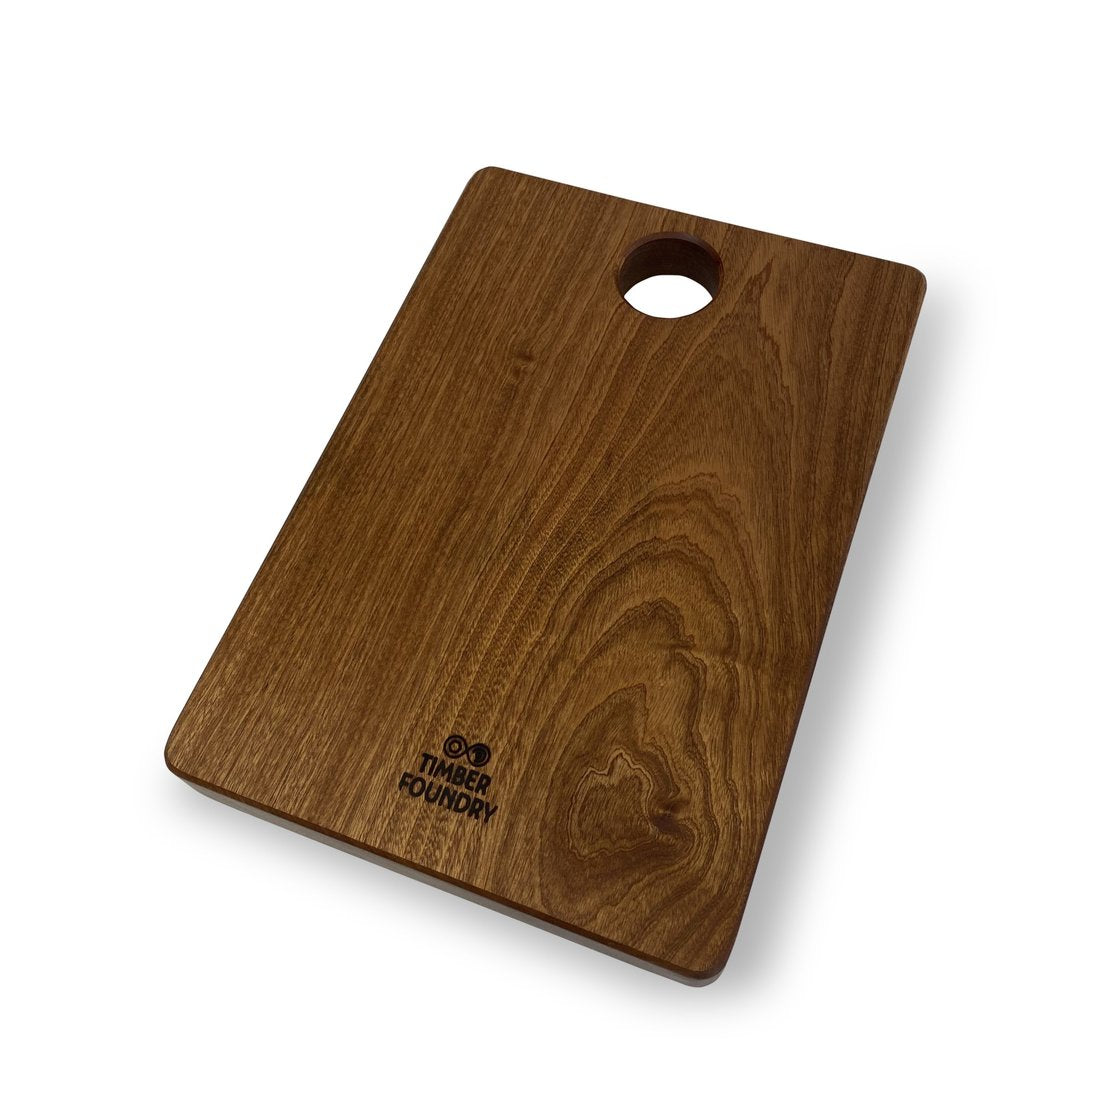 Handcrafted hardwood serving board handmade kitchen chopping board gift set